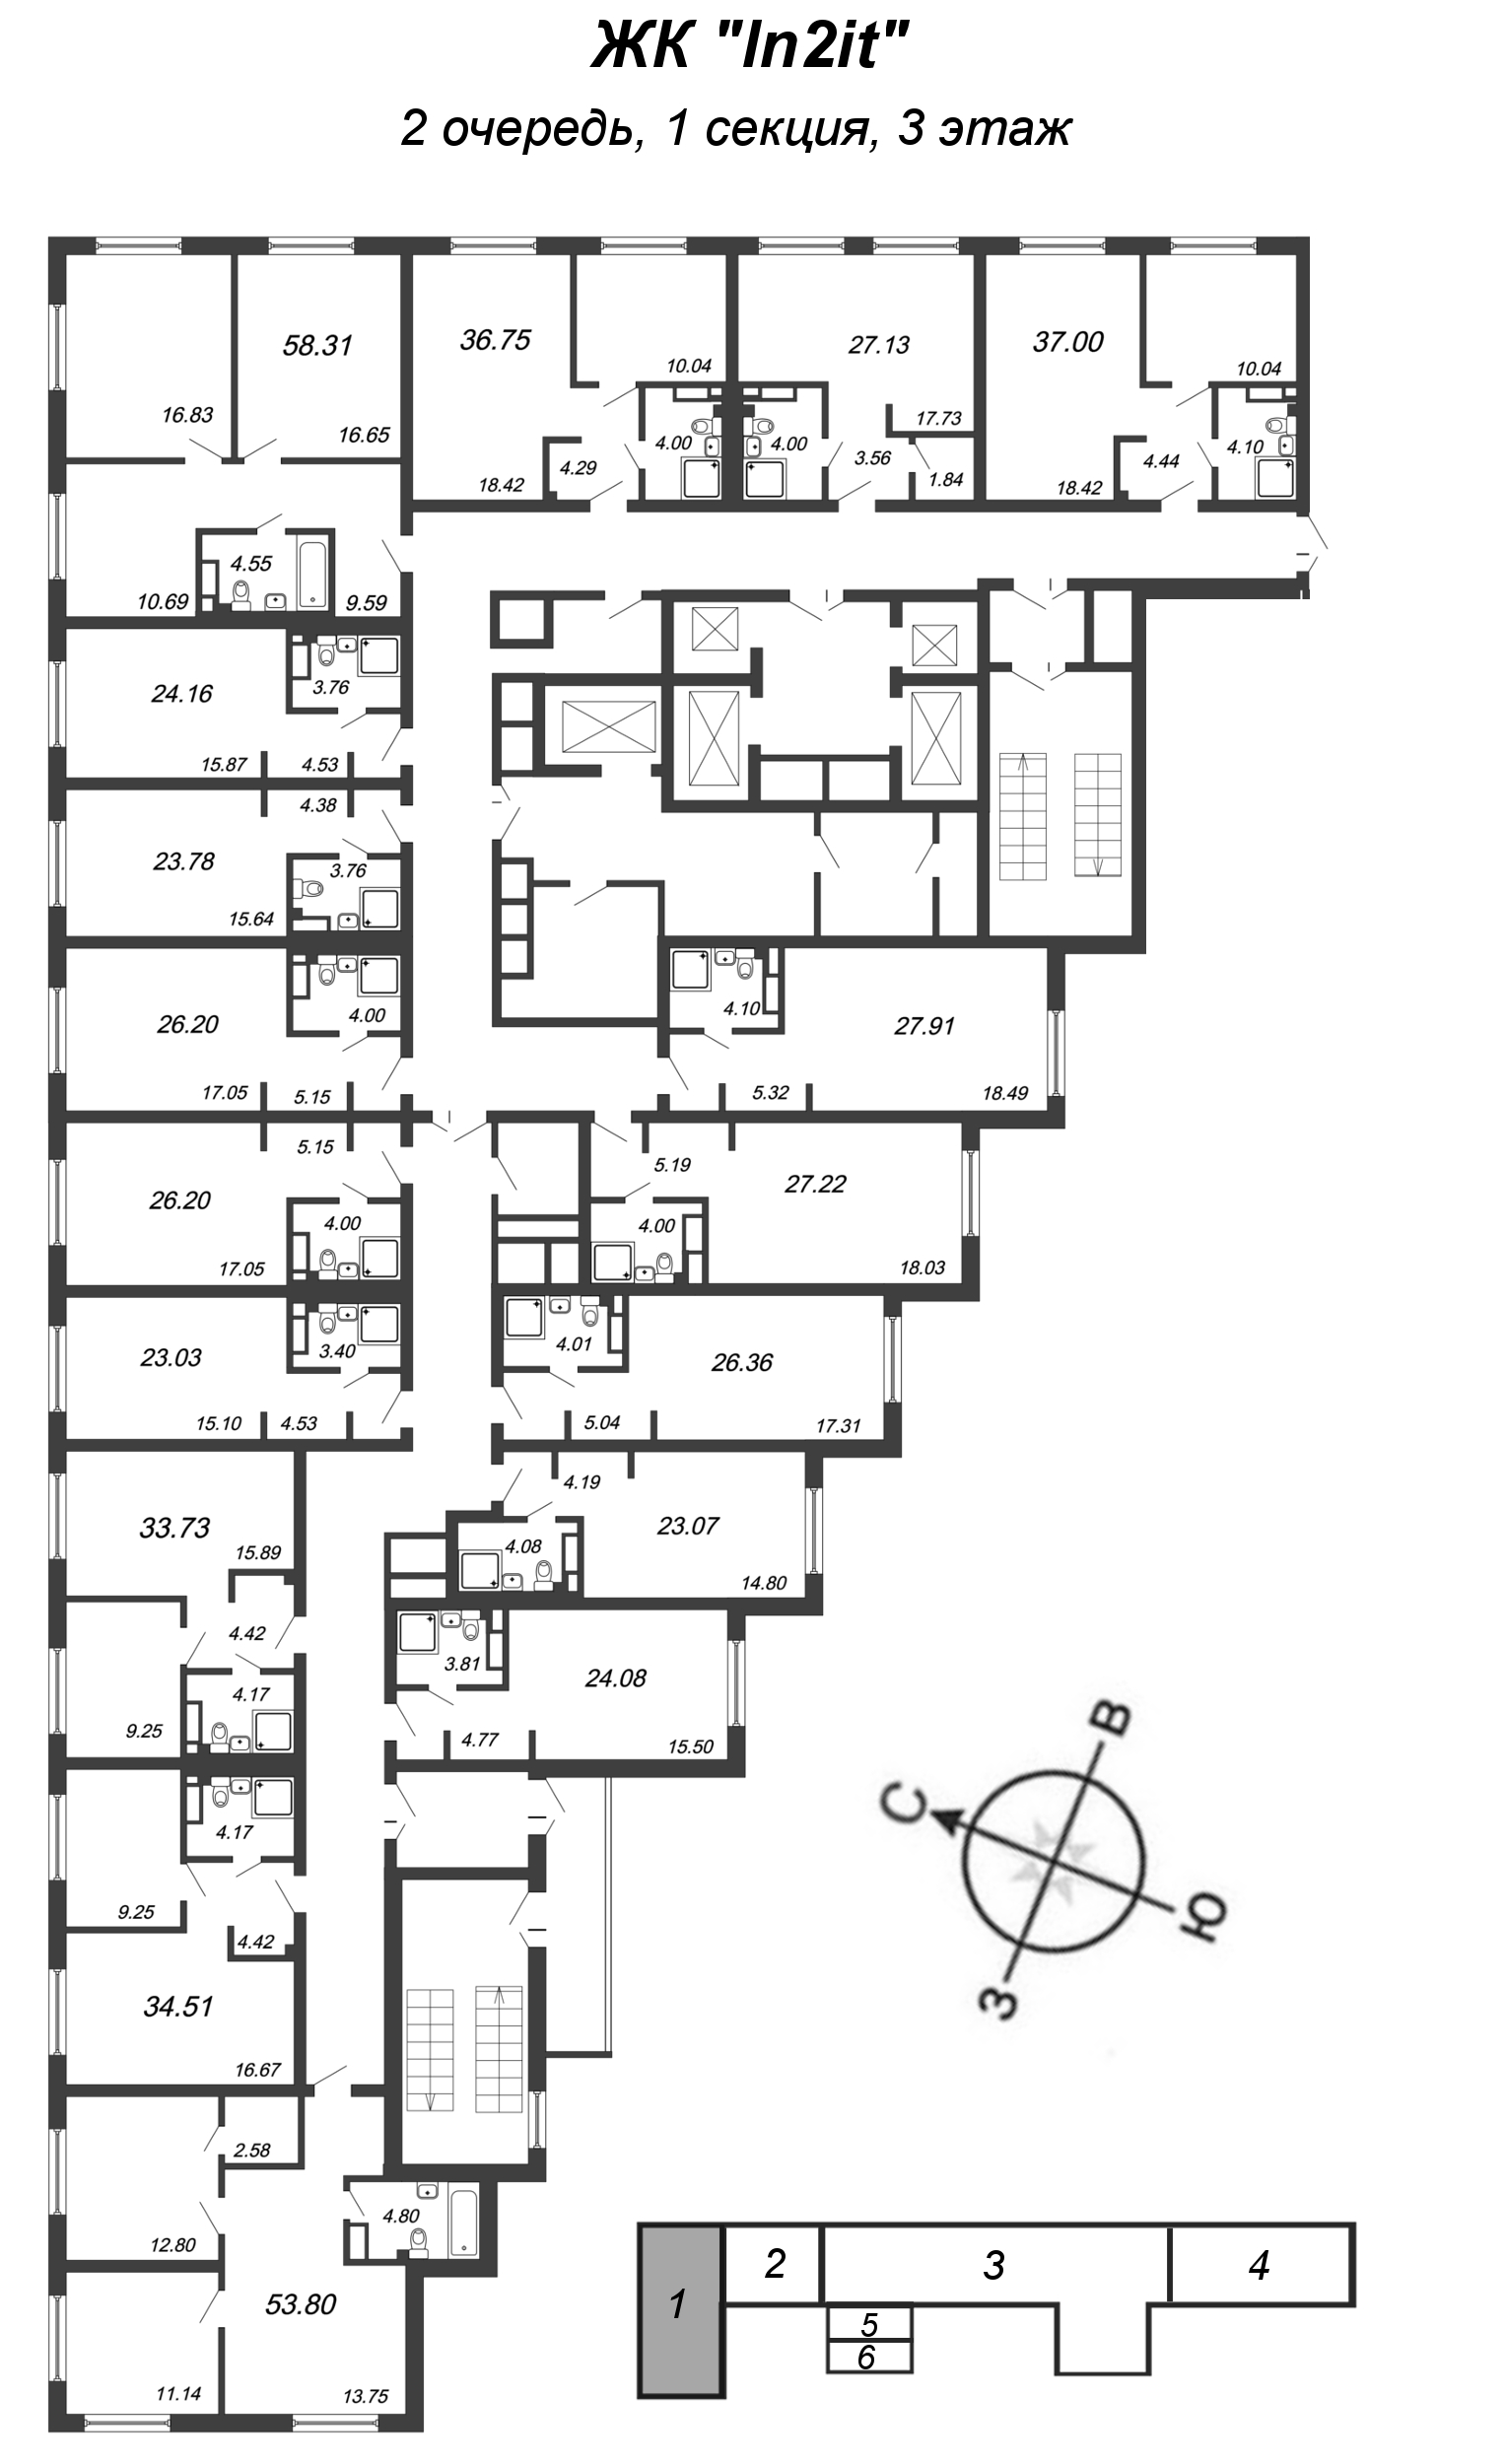 2-комнатная (Евро) квартира, 36.99 м² - планировка этажа